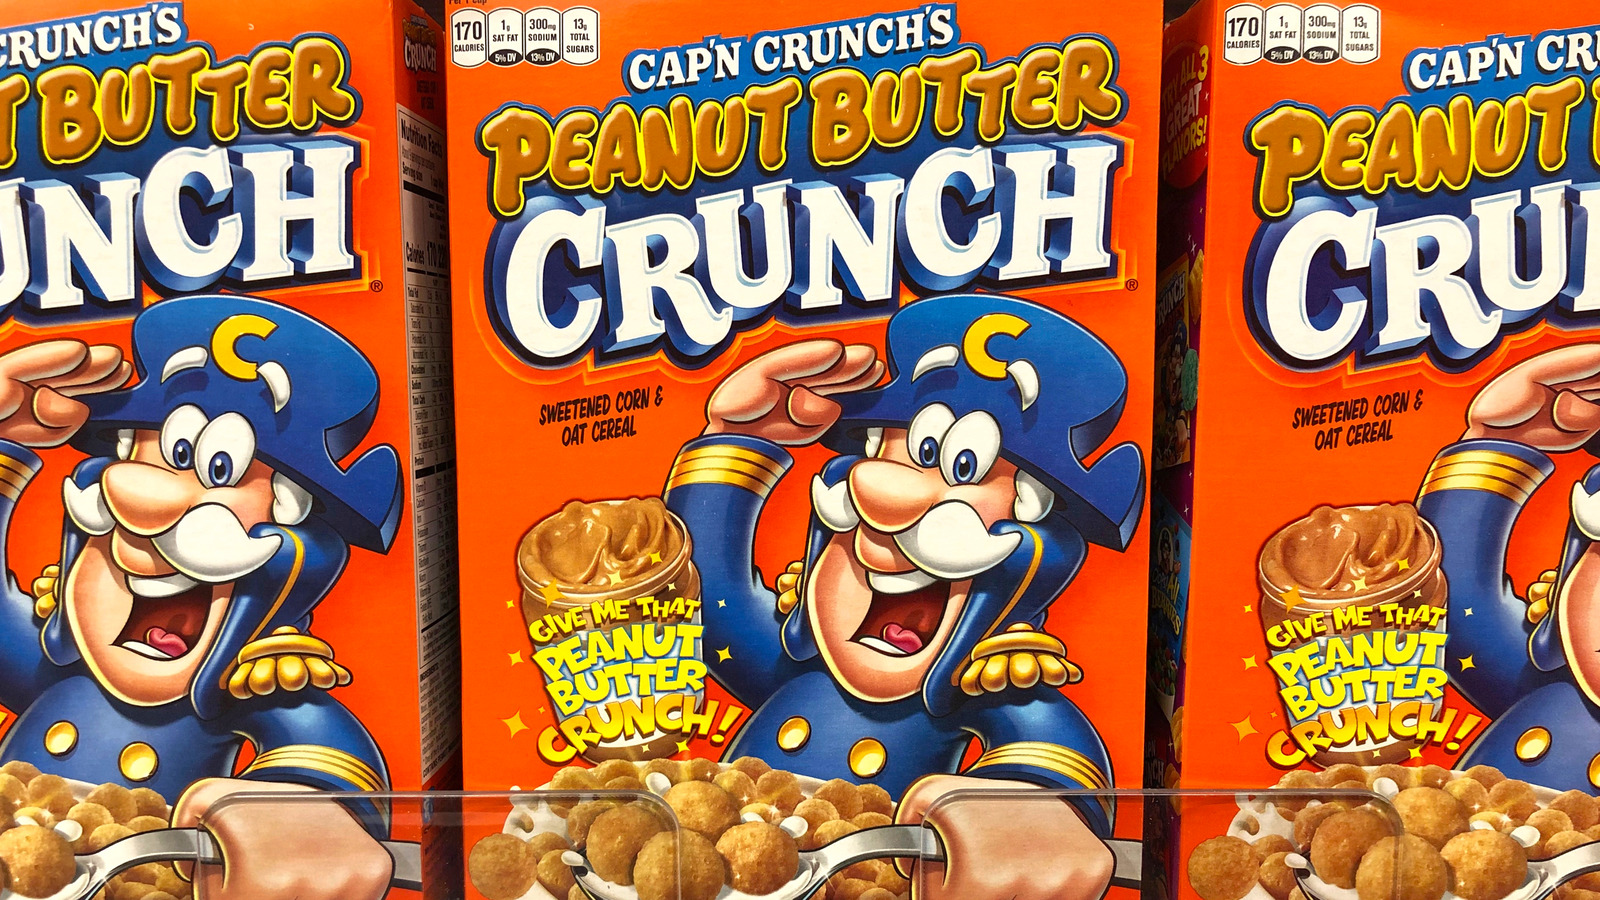 Captain crunch mandela effect